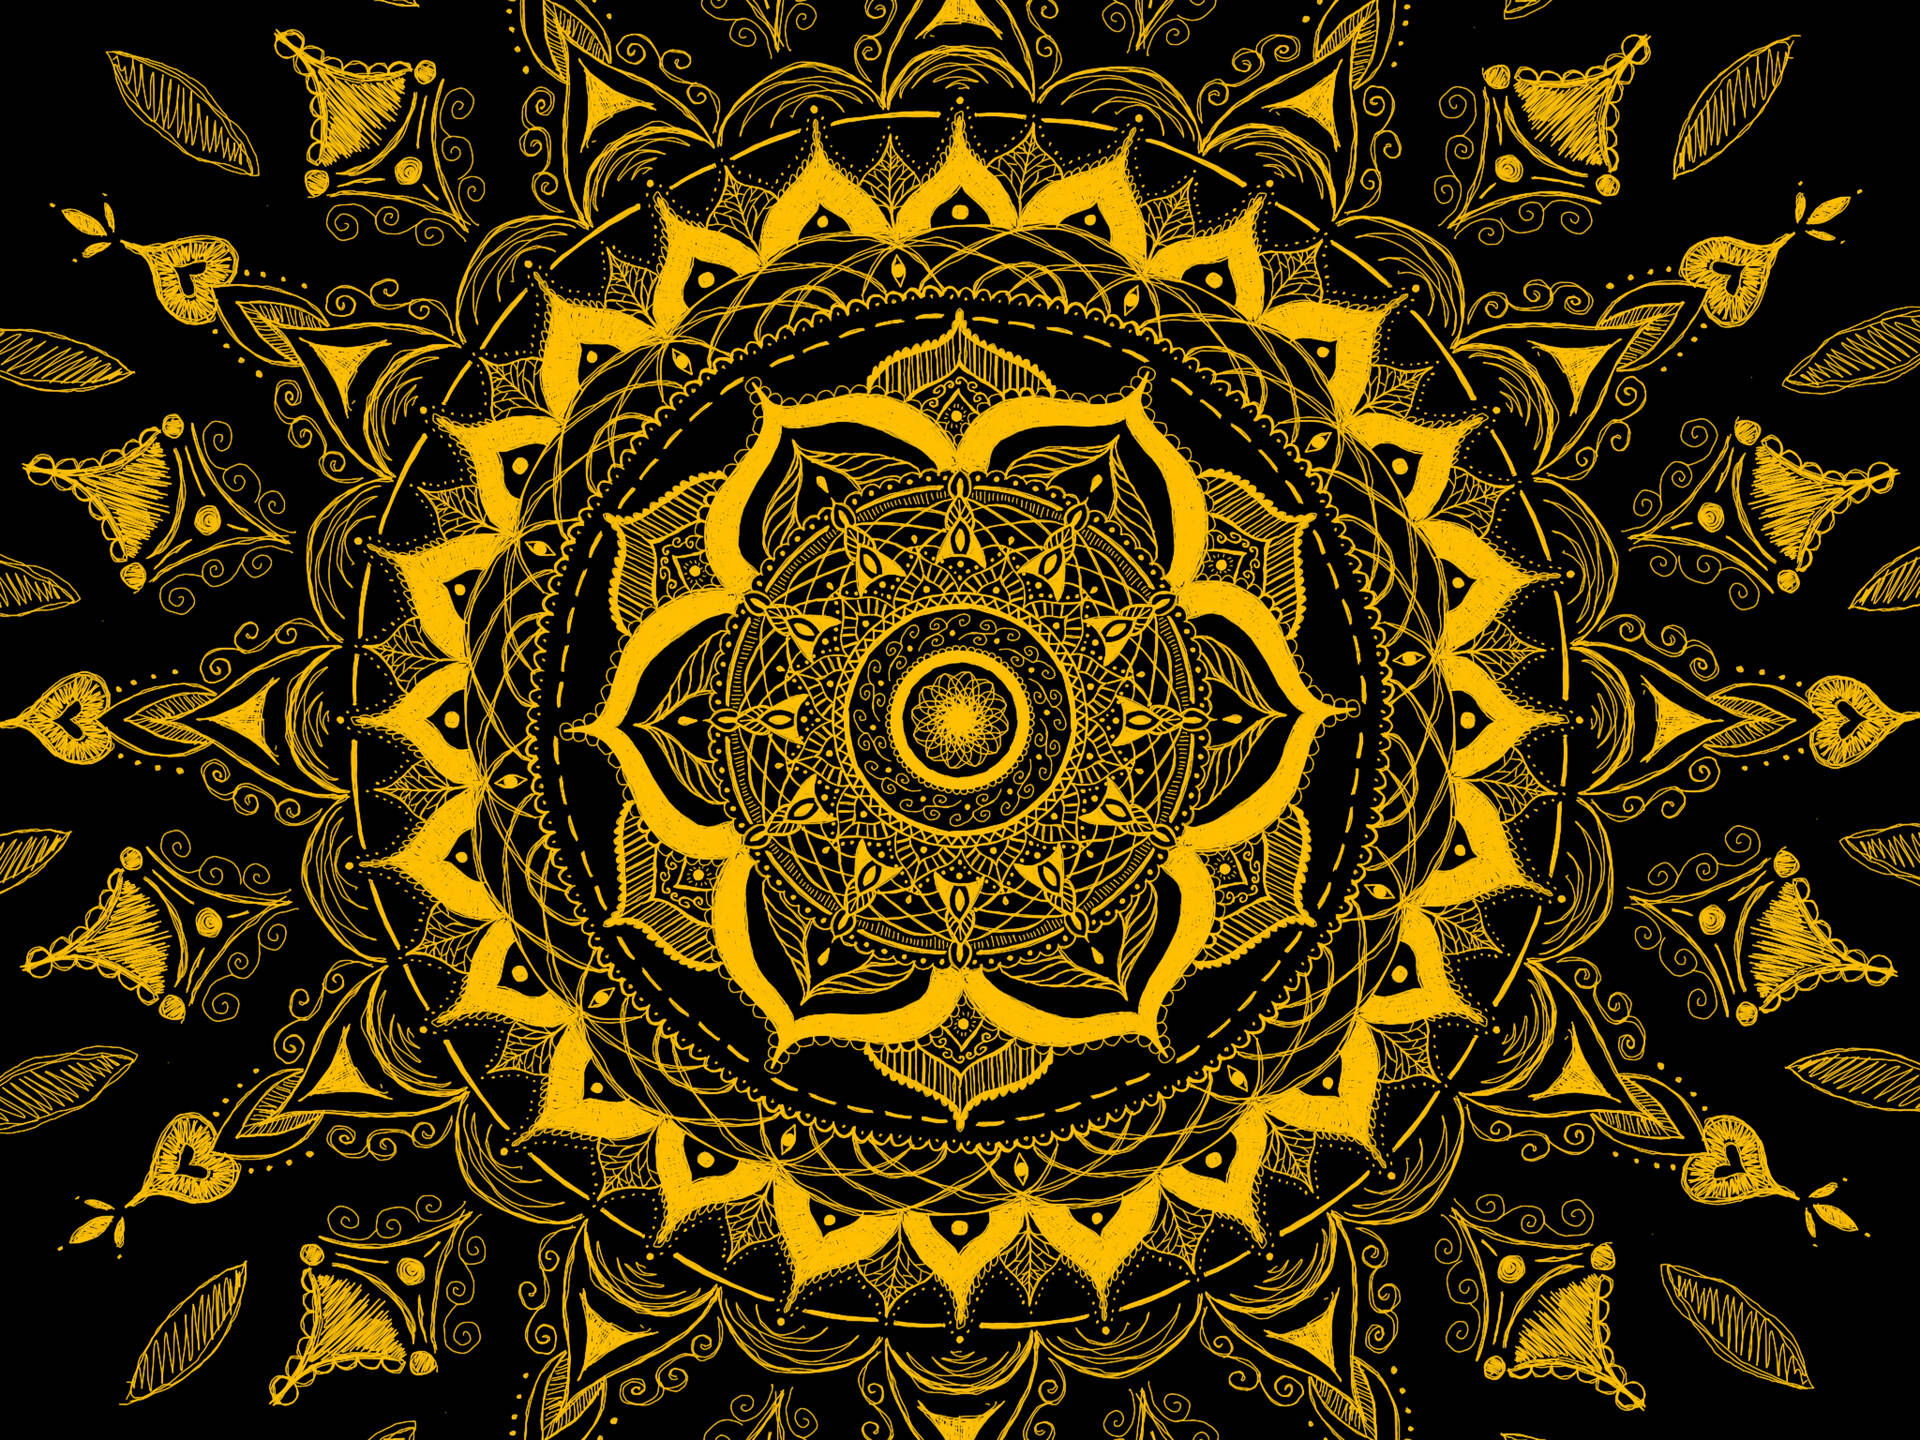 Mandala 3840X2880 Wallpaper and Background Image